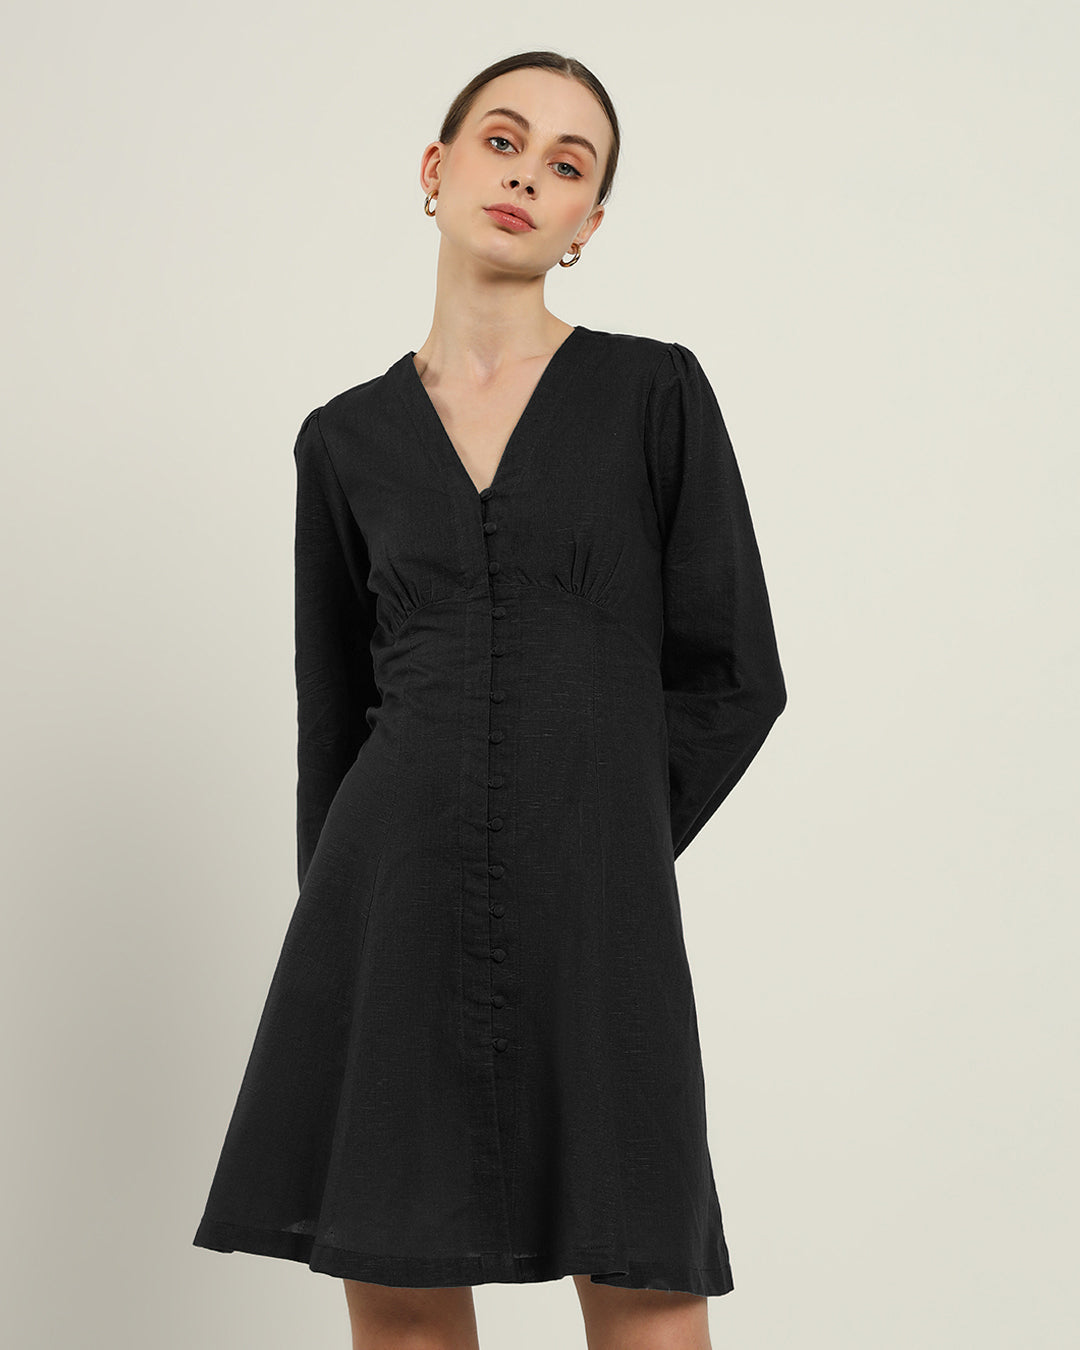 The Dafni Noir Cotton Dress